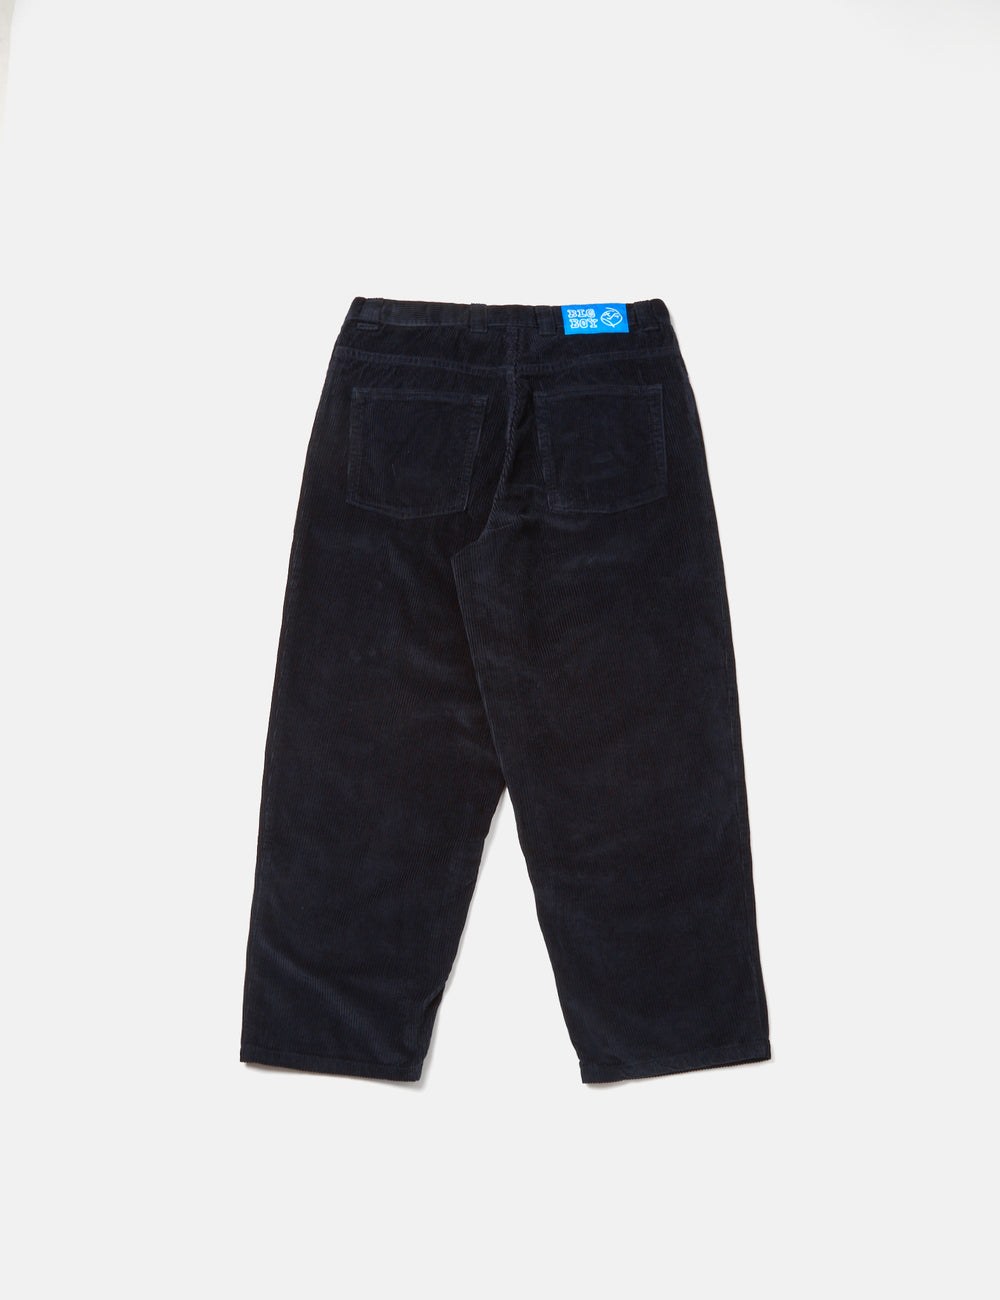 Polar Skate Co. Big Boy Trousers (Cord) - Navy Blue I Urban Excess